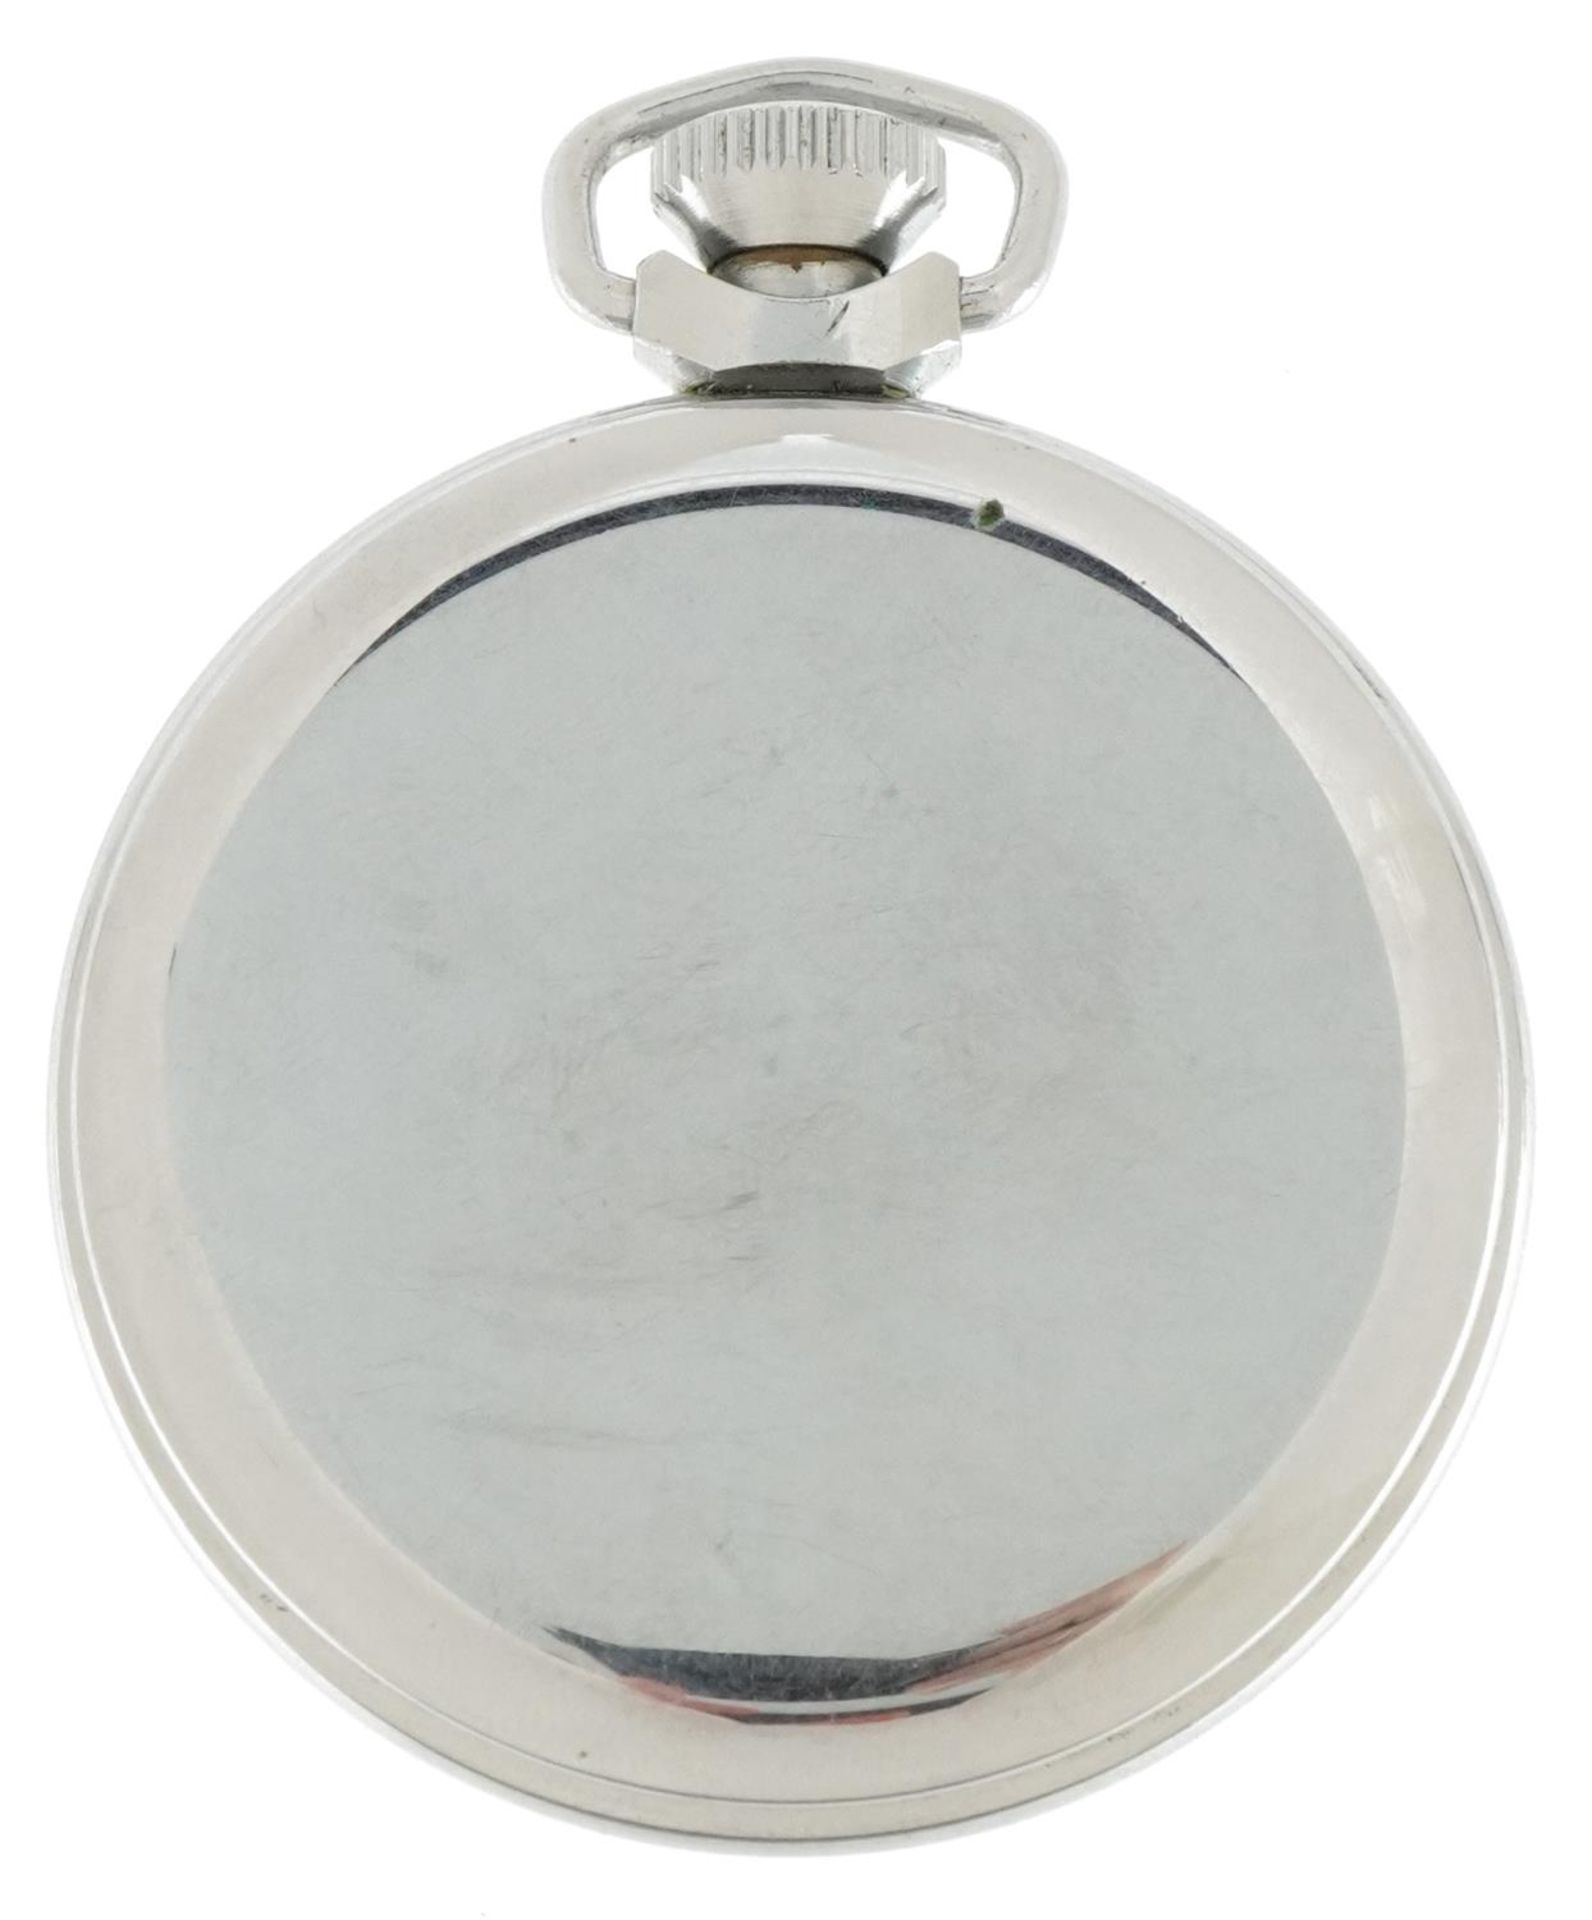 Ingersoll, gentlemen's Ingersoll Triumph open face pocket watch, 51mm in diameter : For further - Image 2 of 3